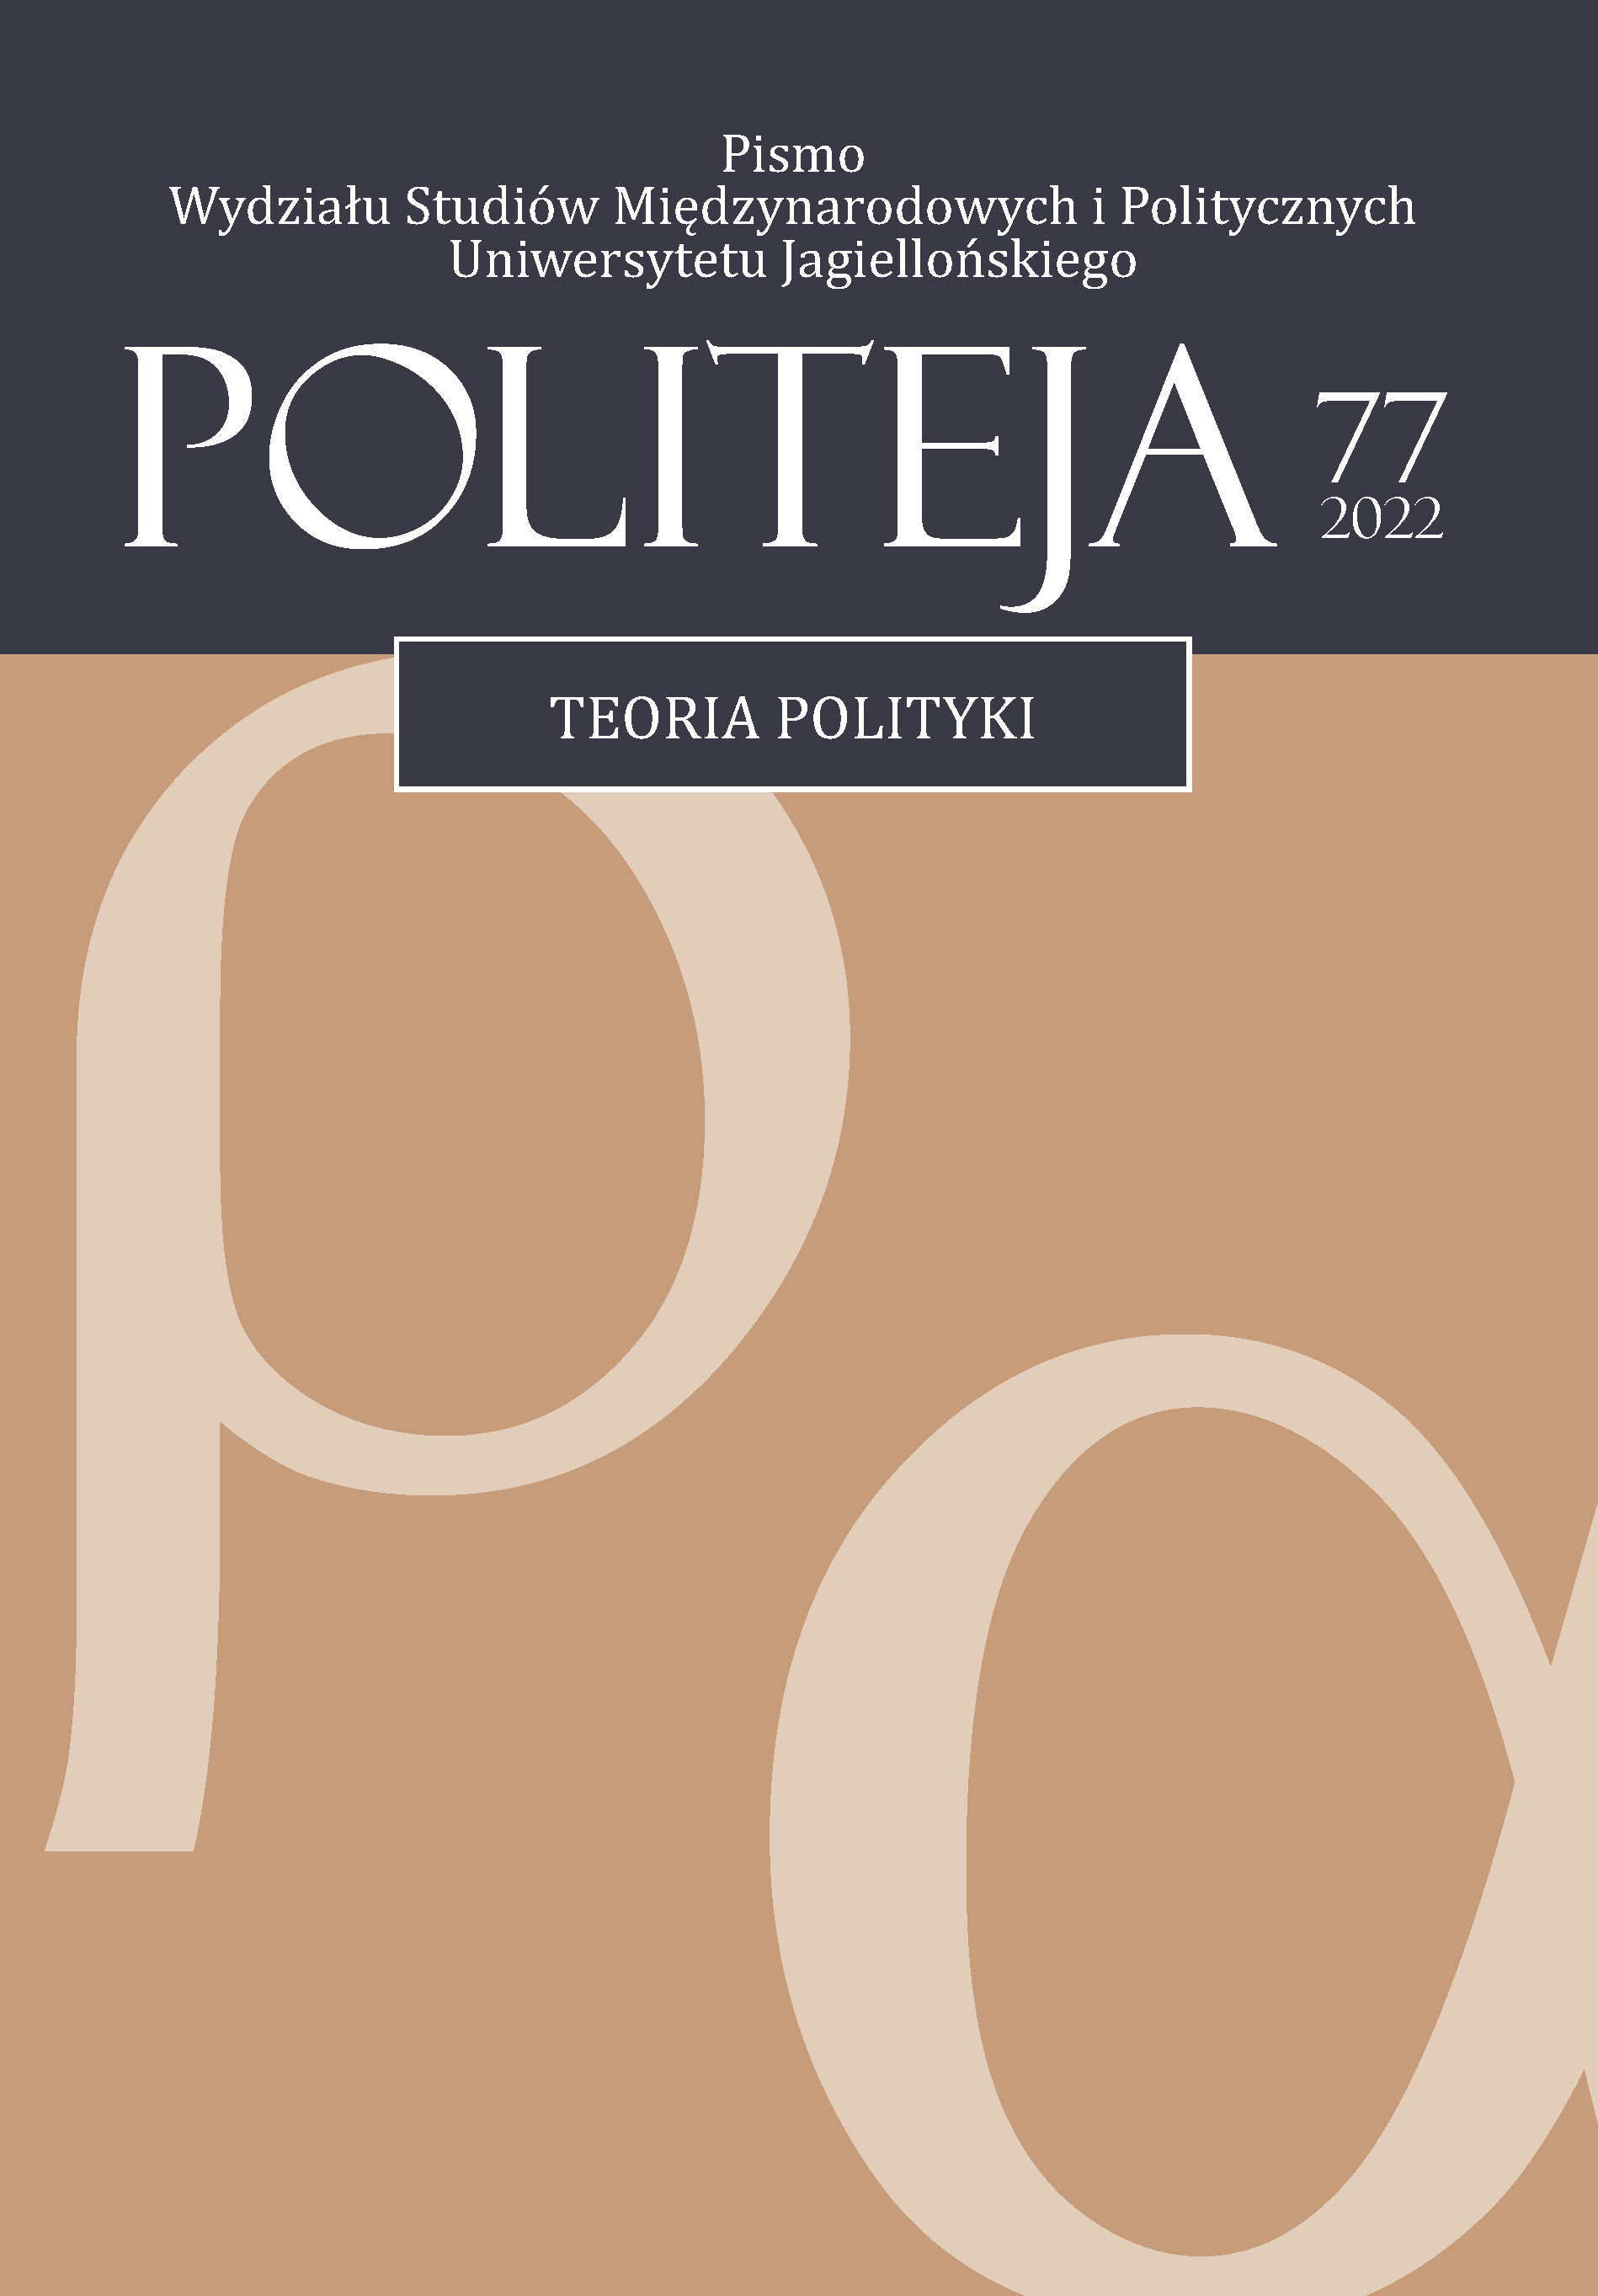 					View Vol. 19 No. 2(77) (2022): Teoria polityki
				